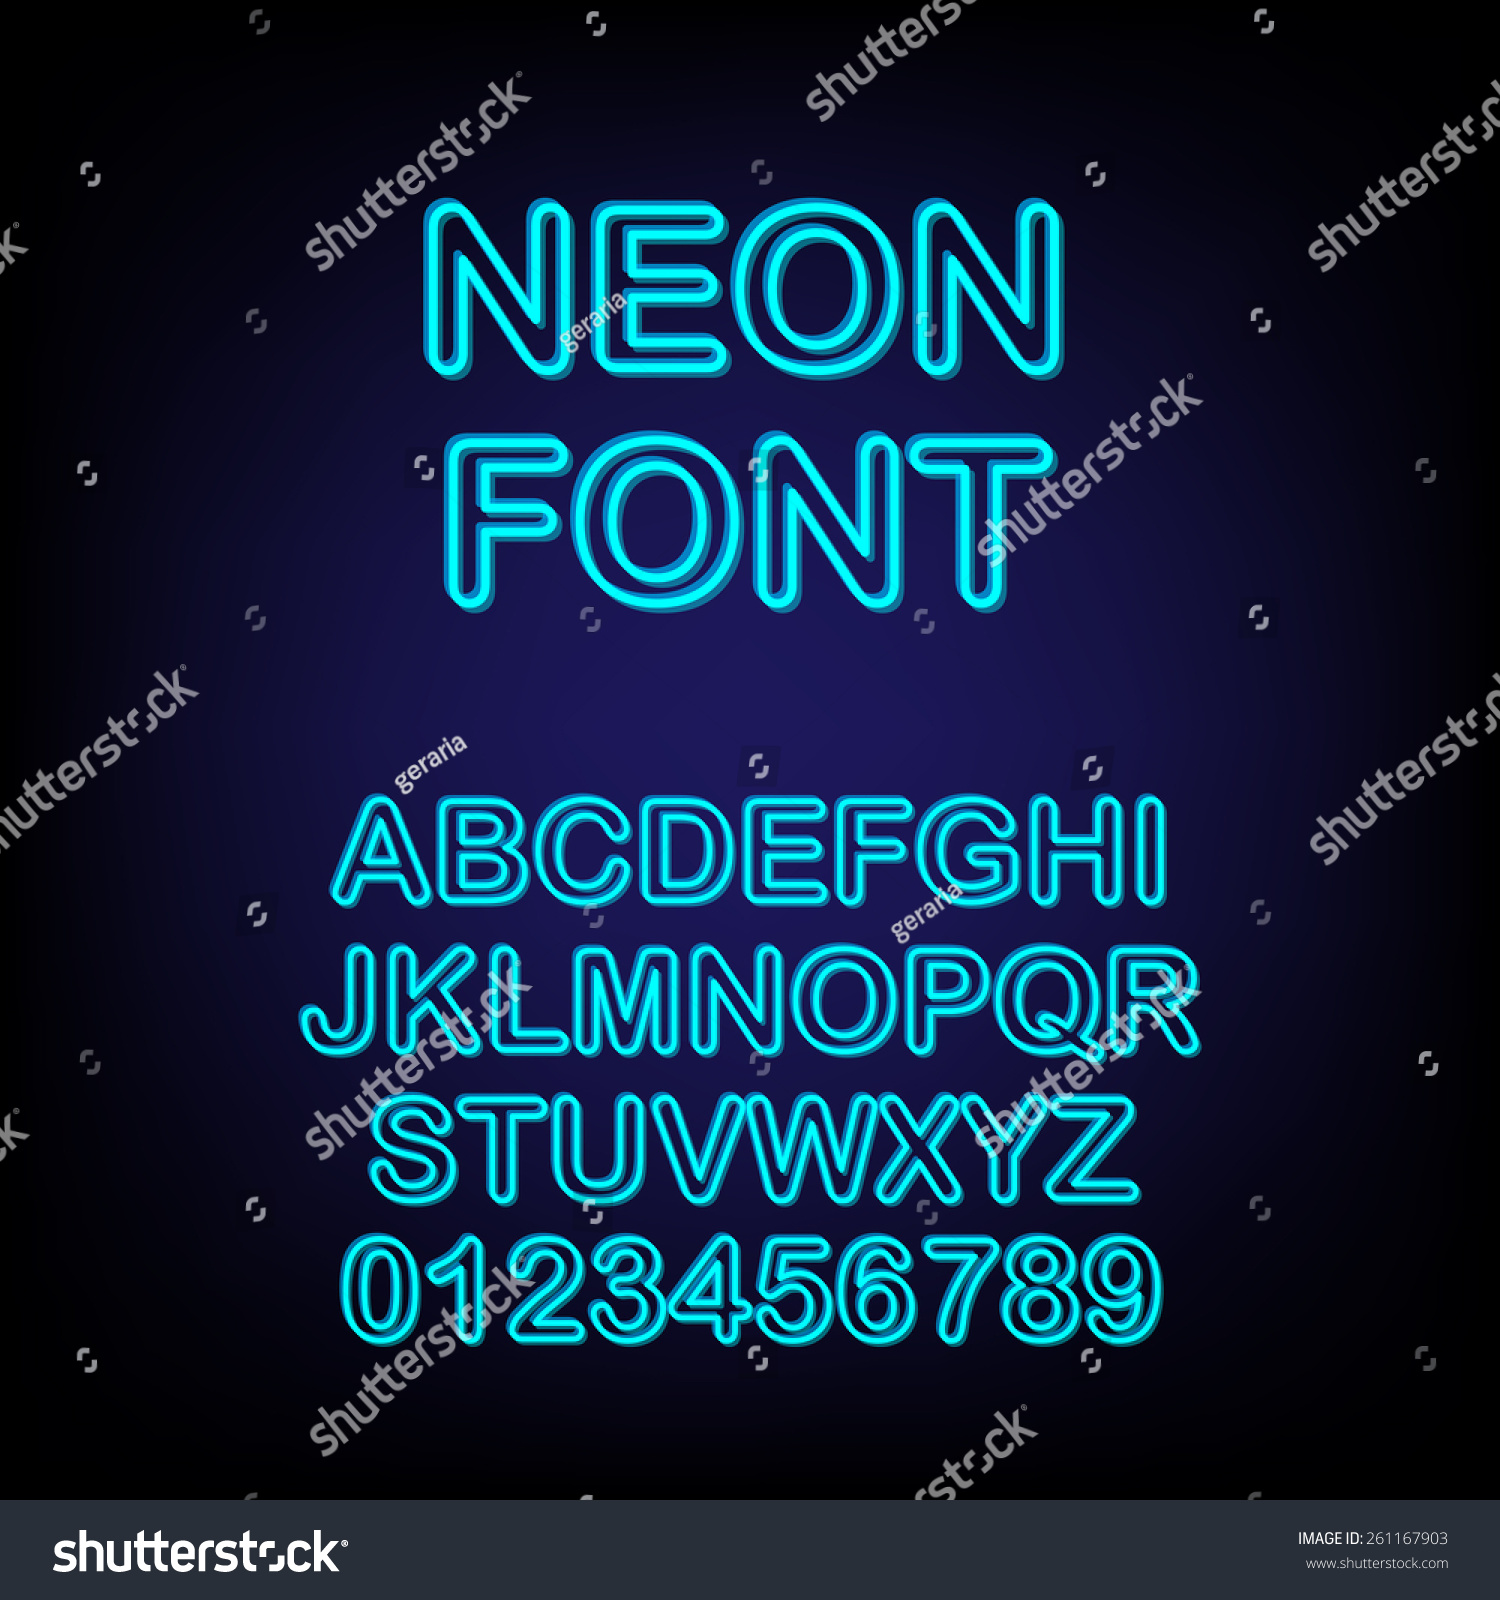 Neon Font. Vector Illustration. - 261167903 : Shutterstock